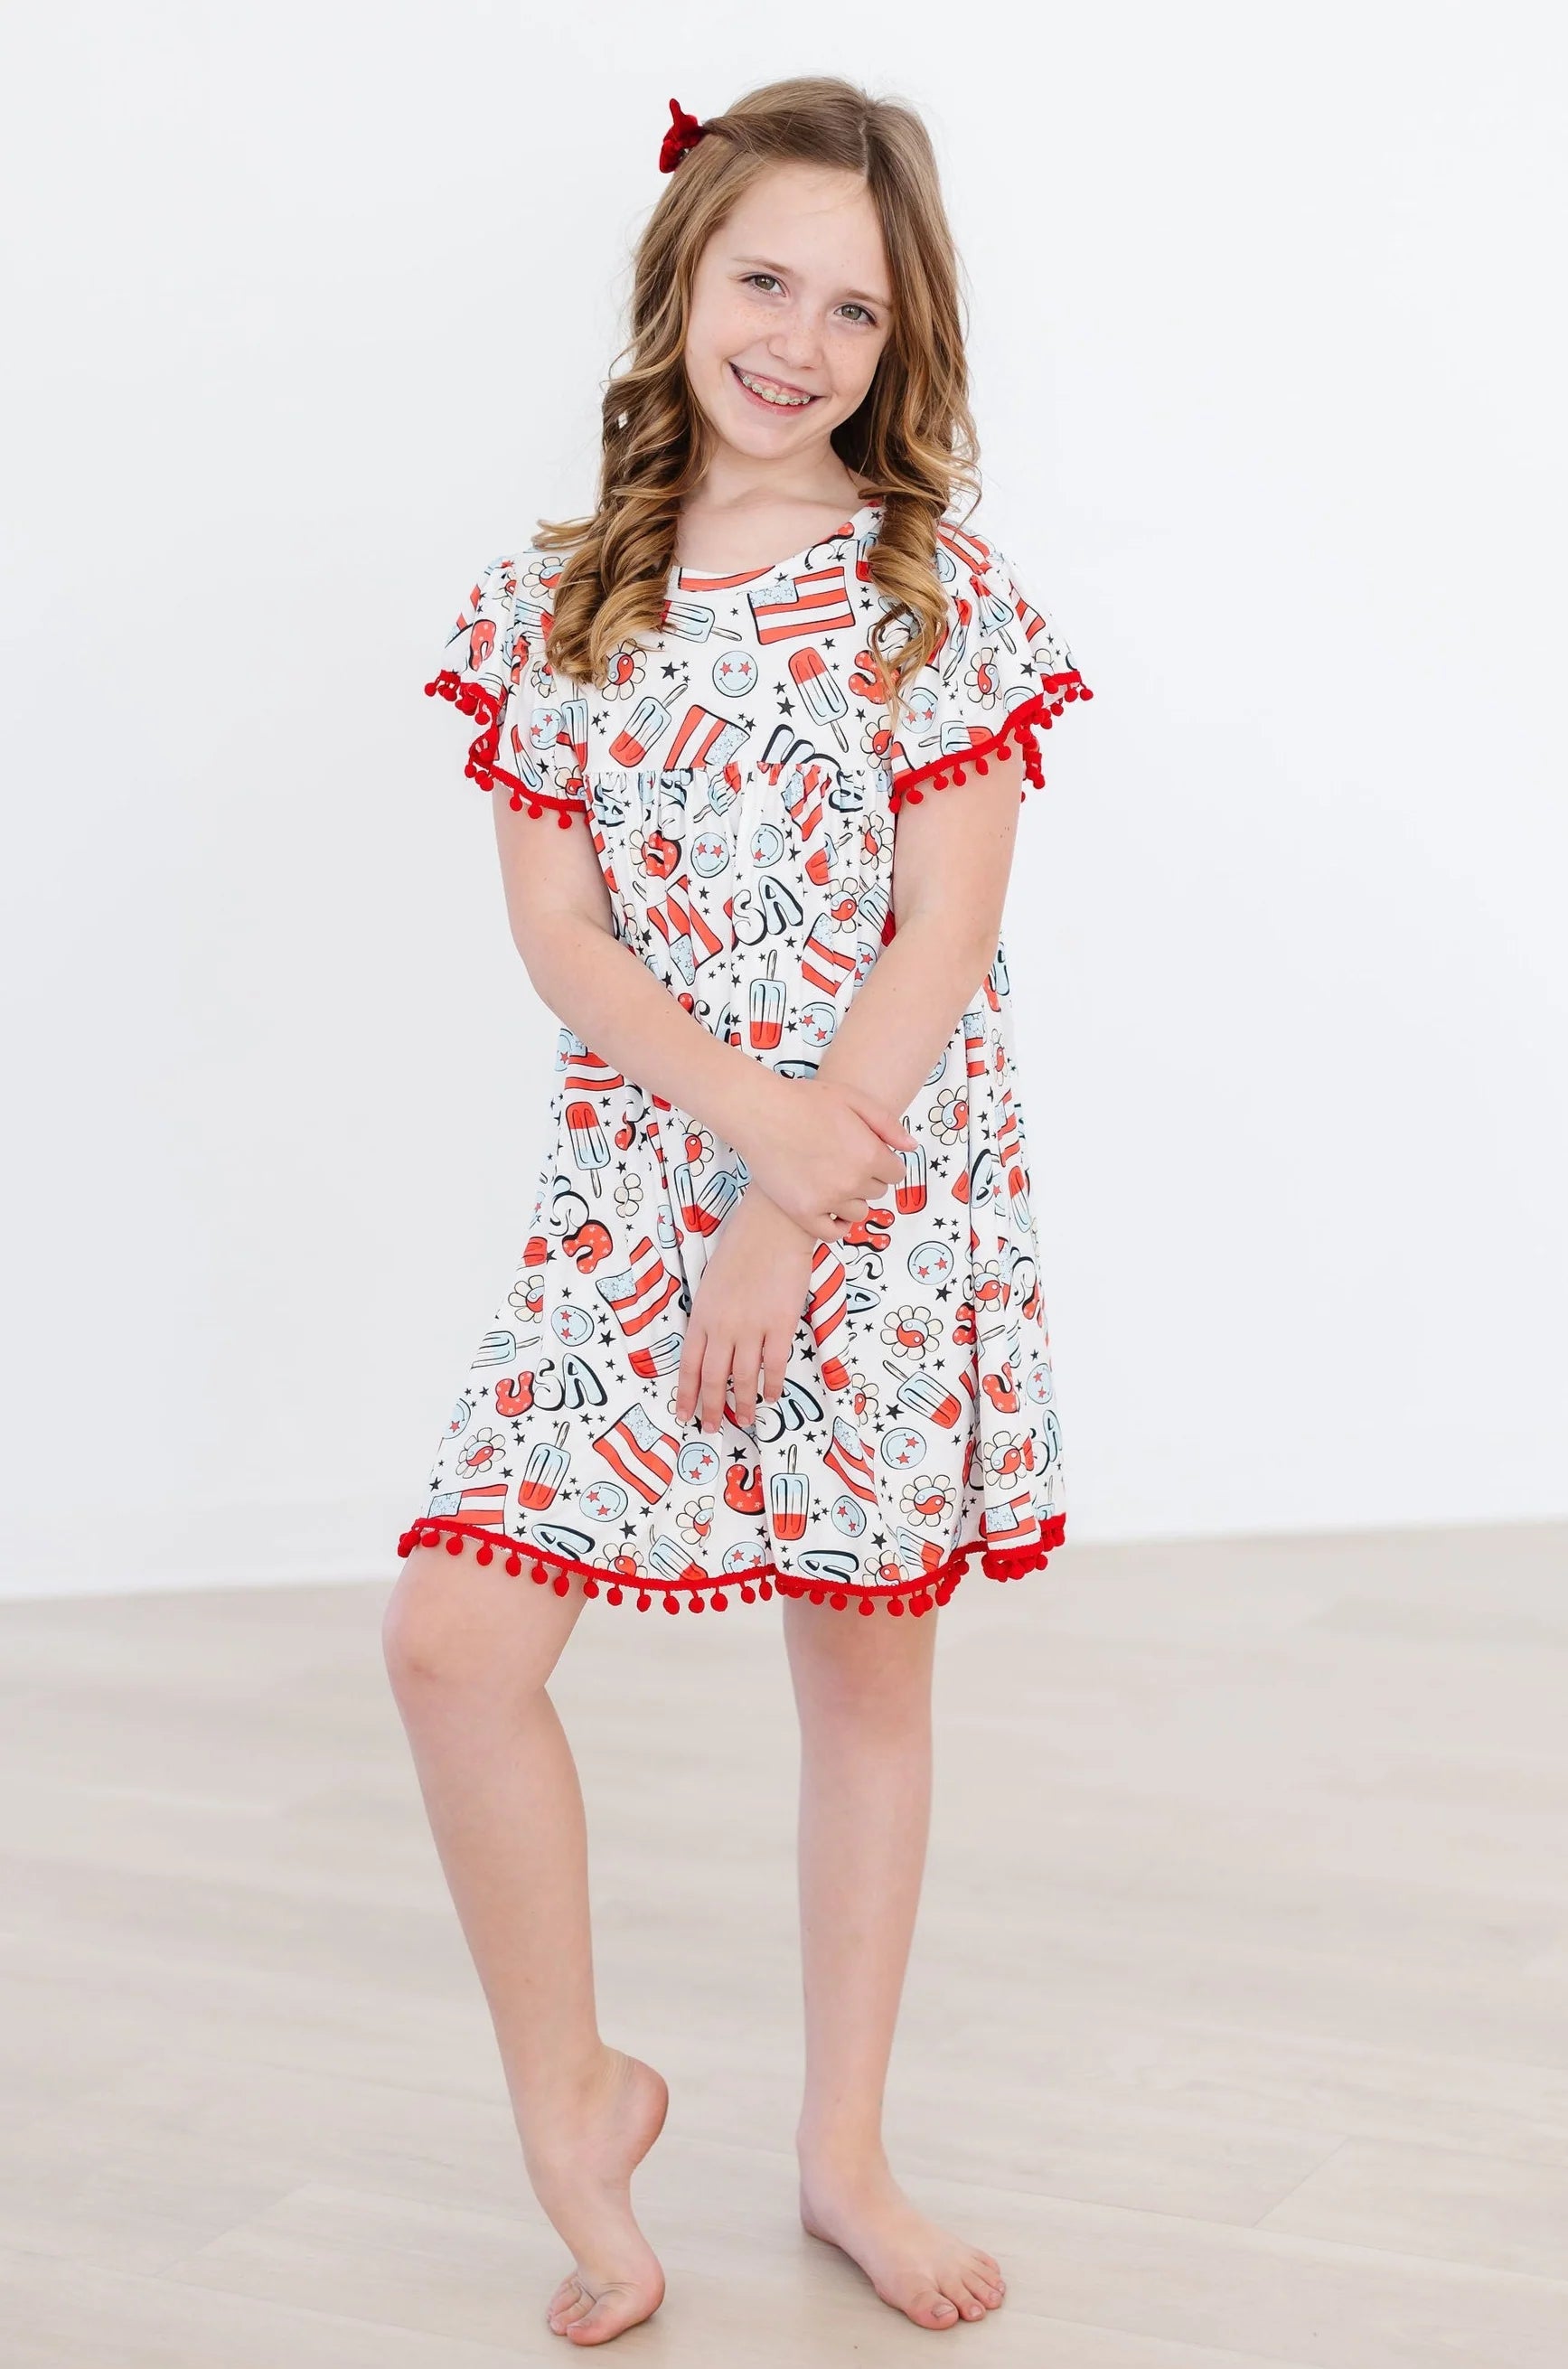 Star Spangled Cutie Pom Pom Dress